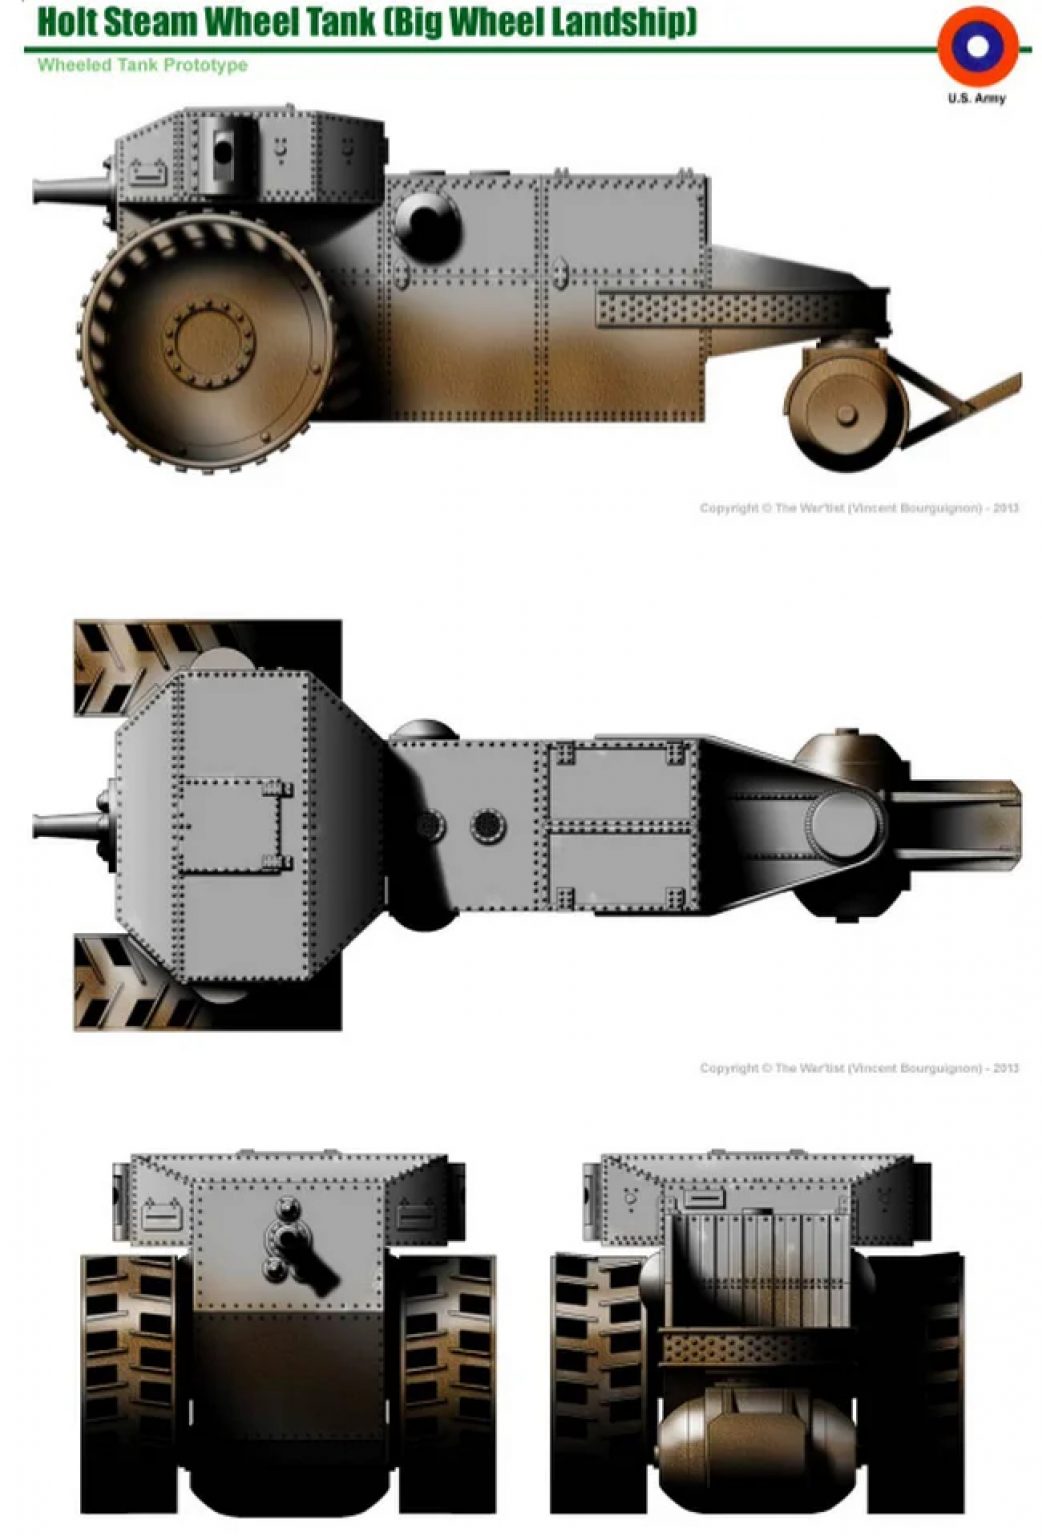 Holt steam wheel tank